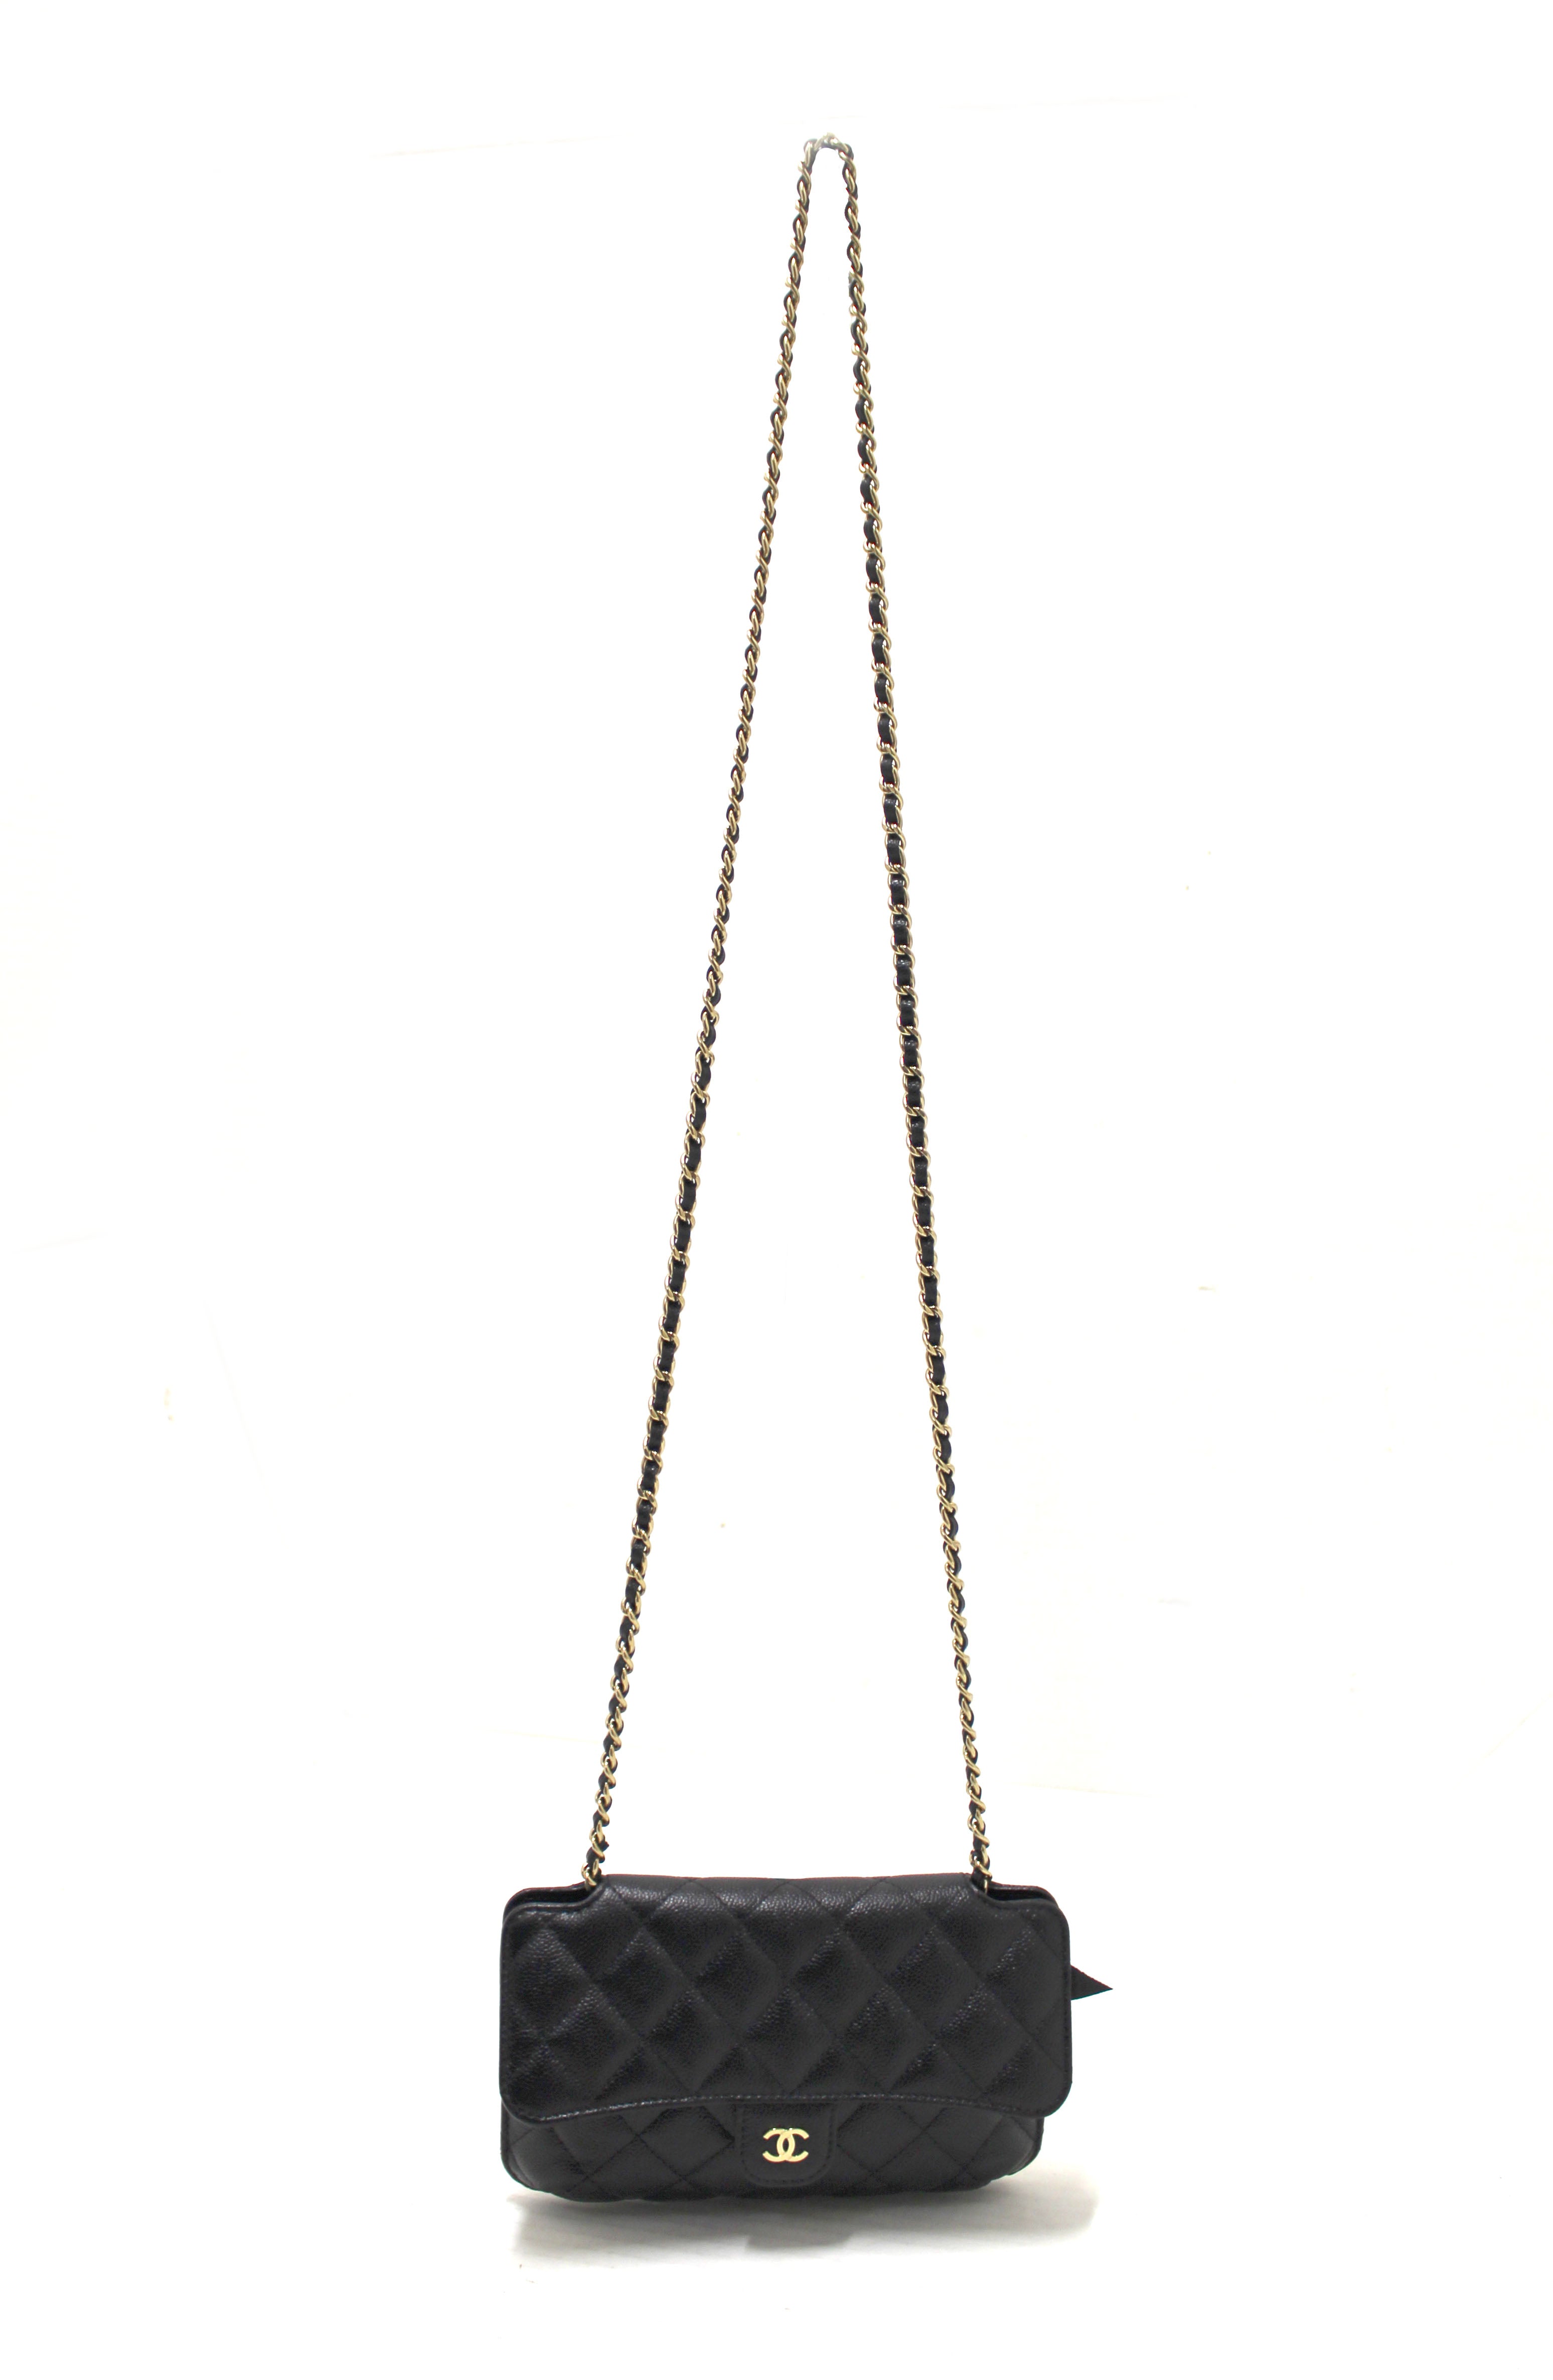 black and white chanel handbag authentic